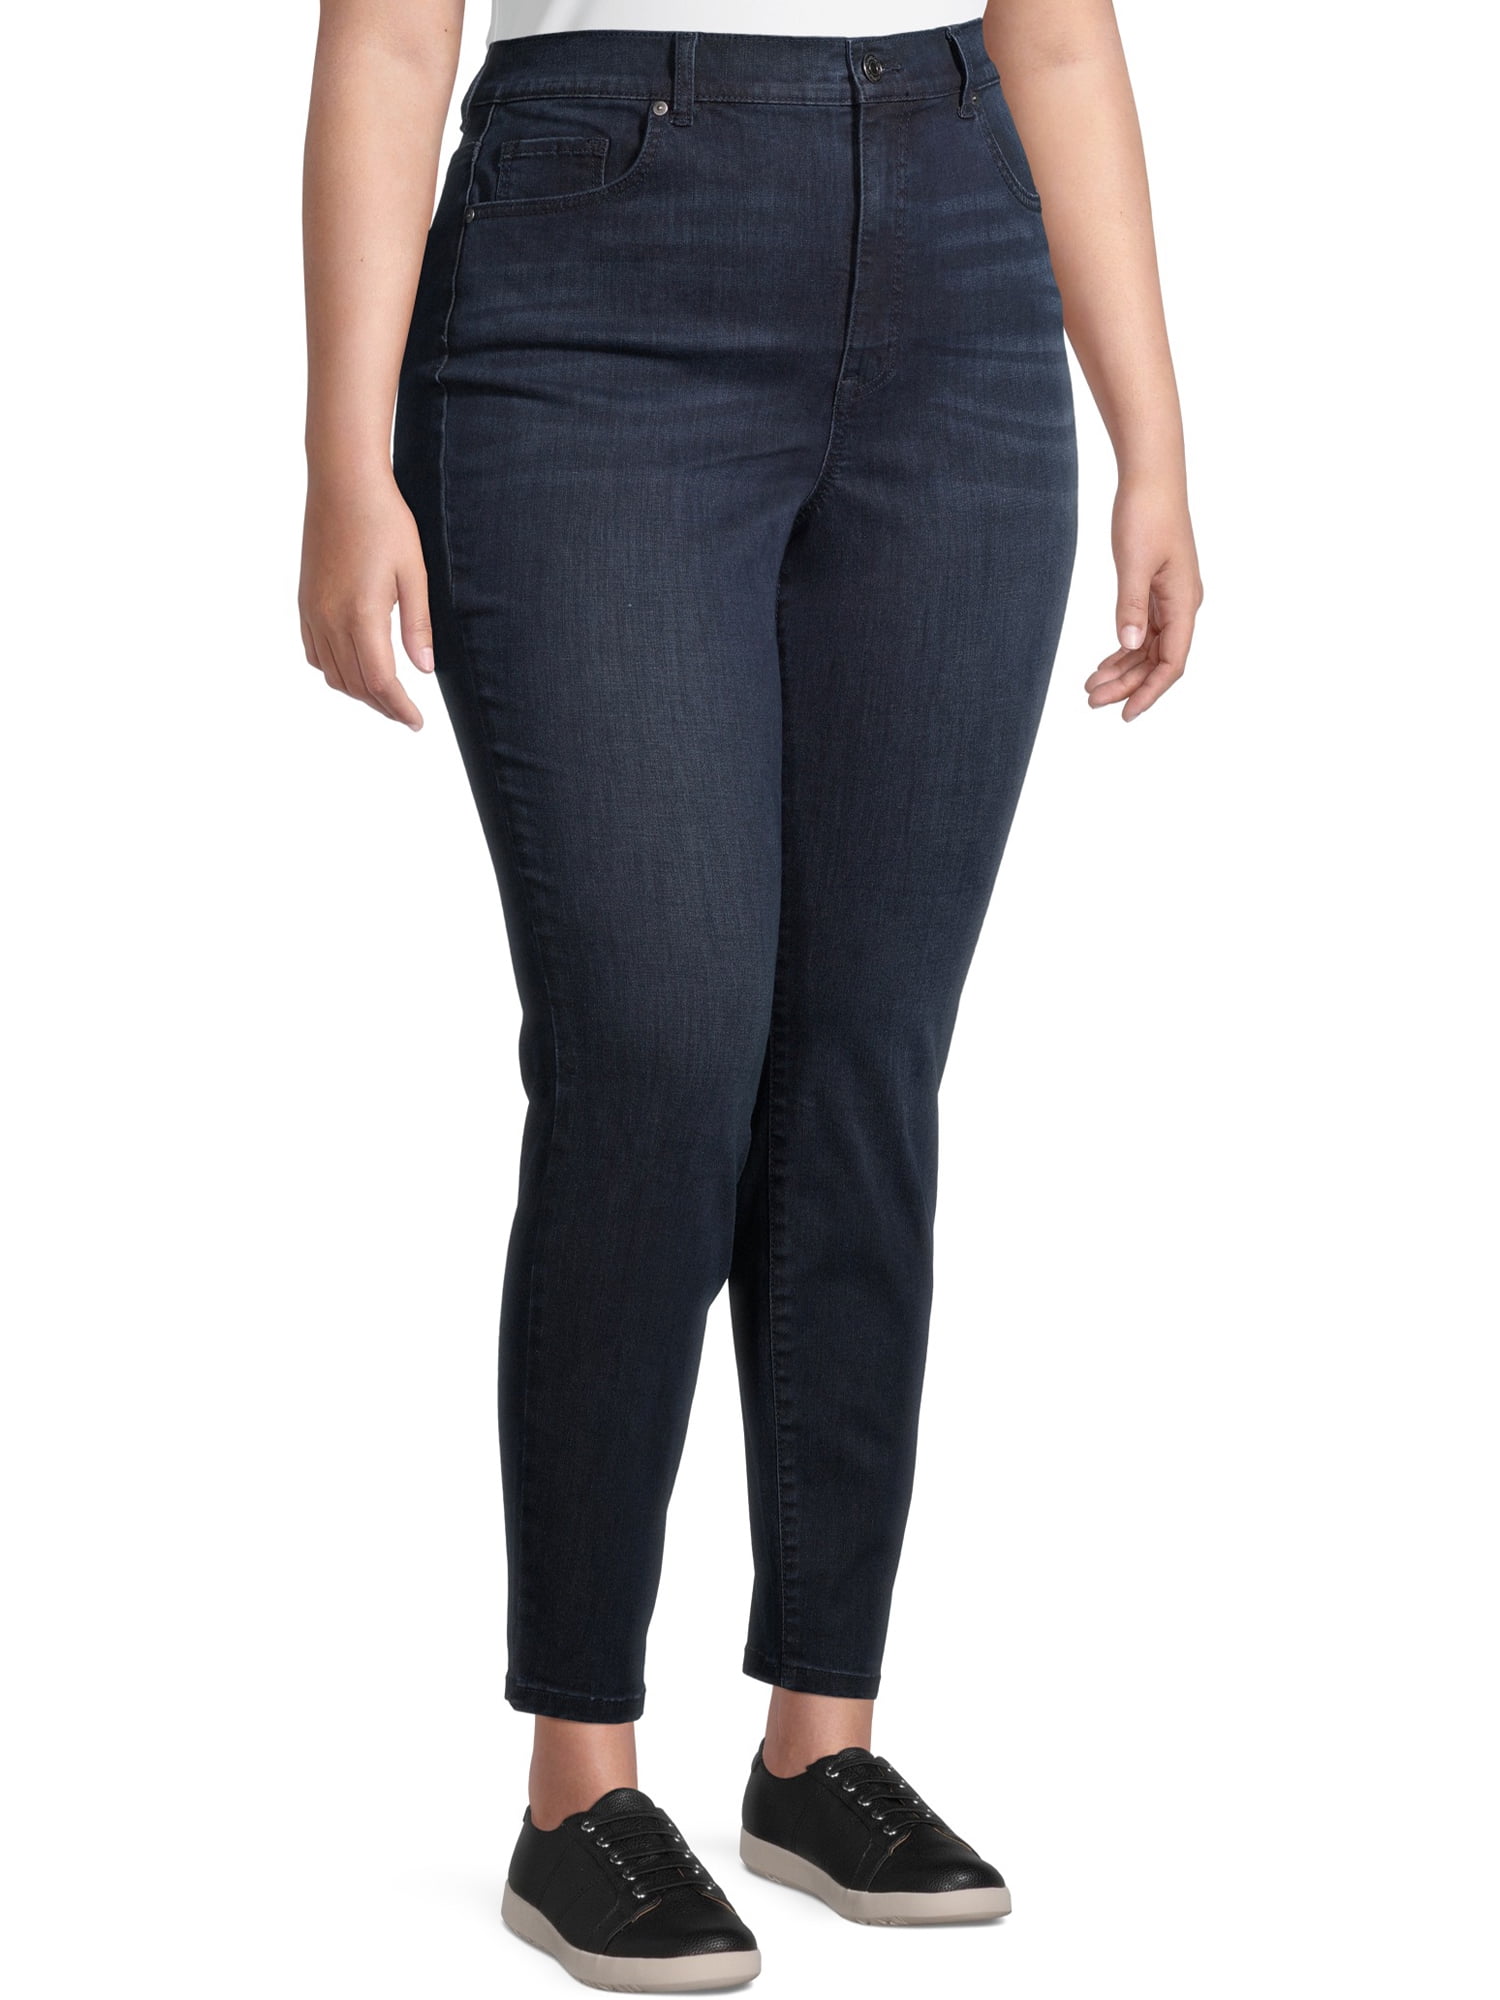 Terra & Sky Solid Blue Jeans Size 18 (Plus) - 32% off